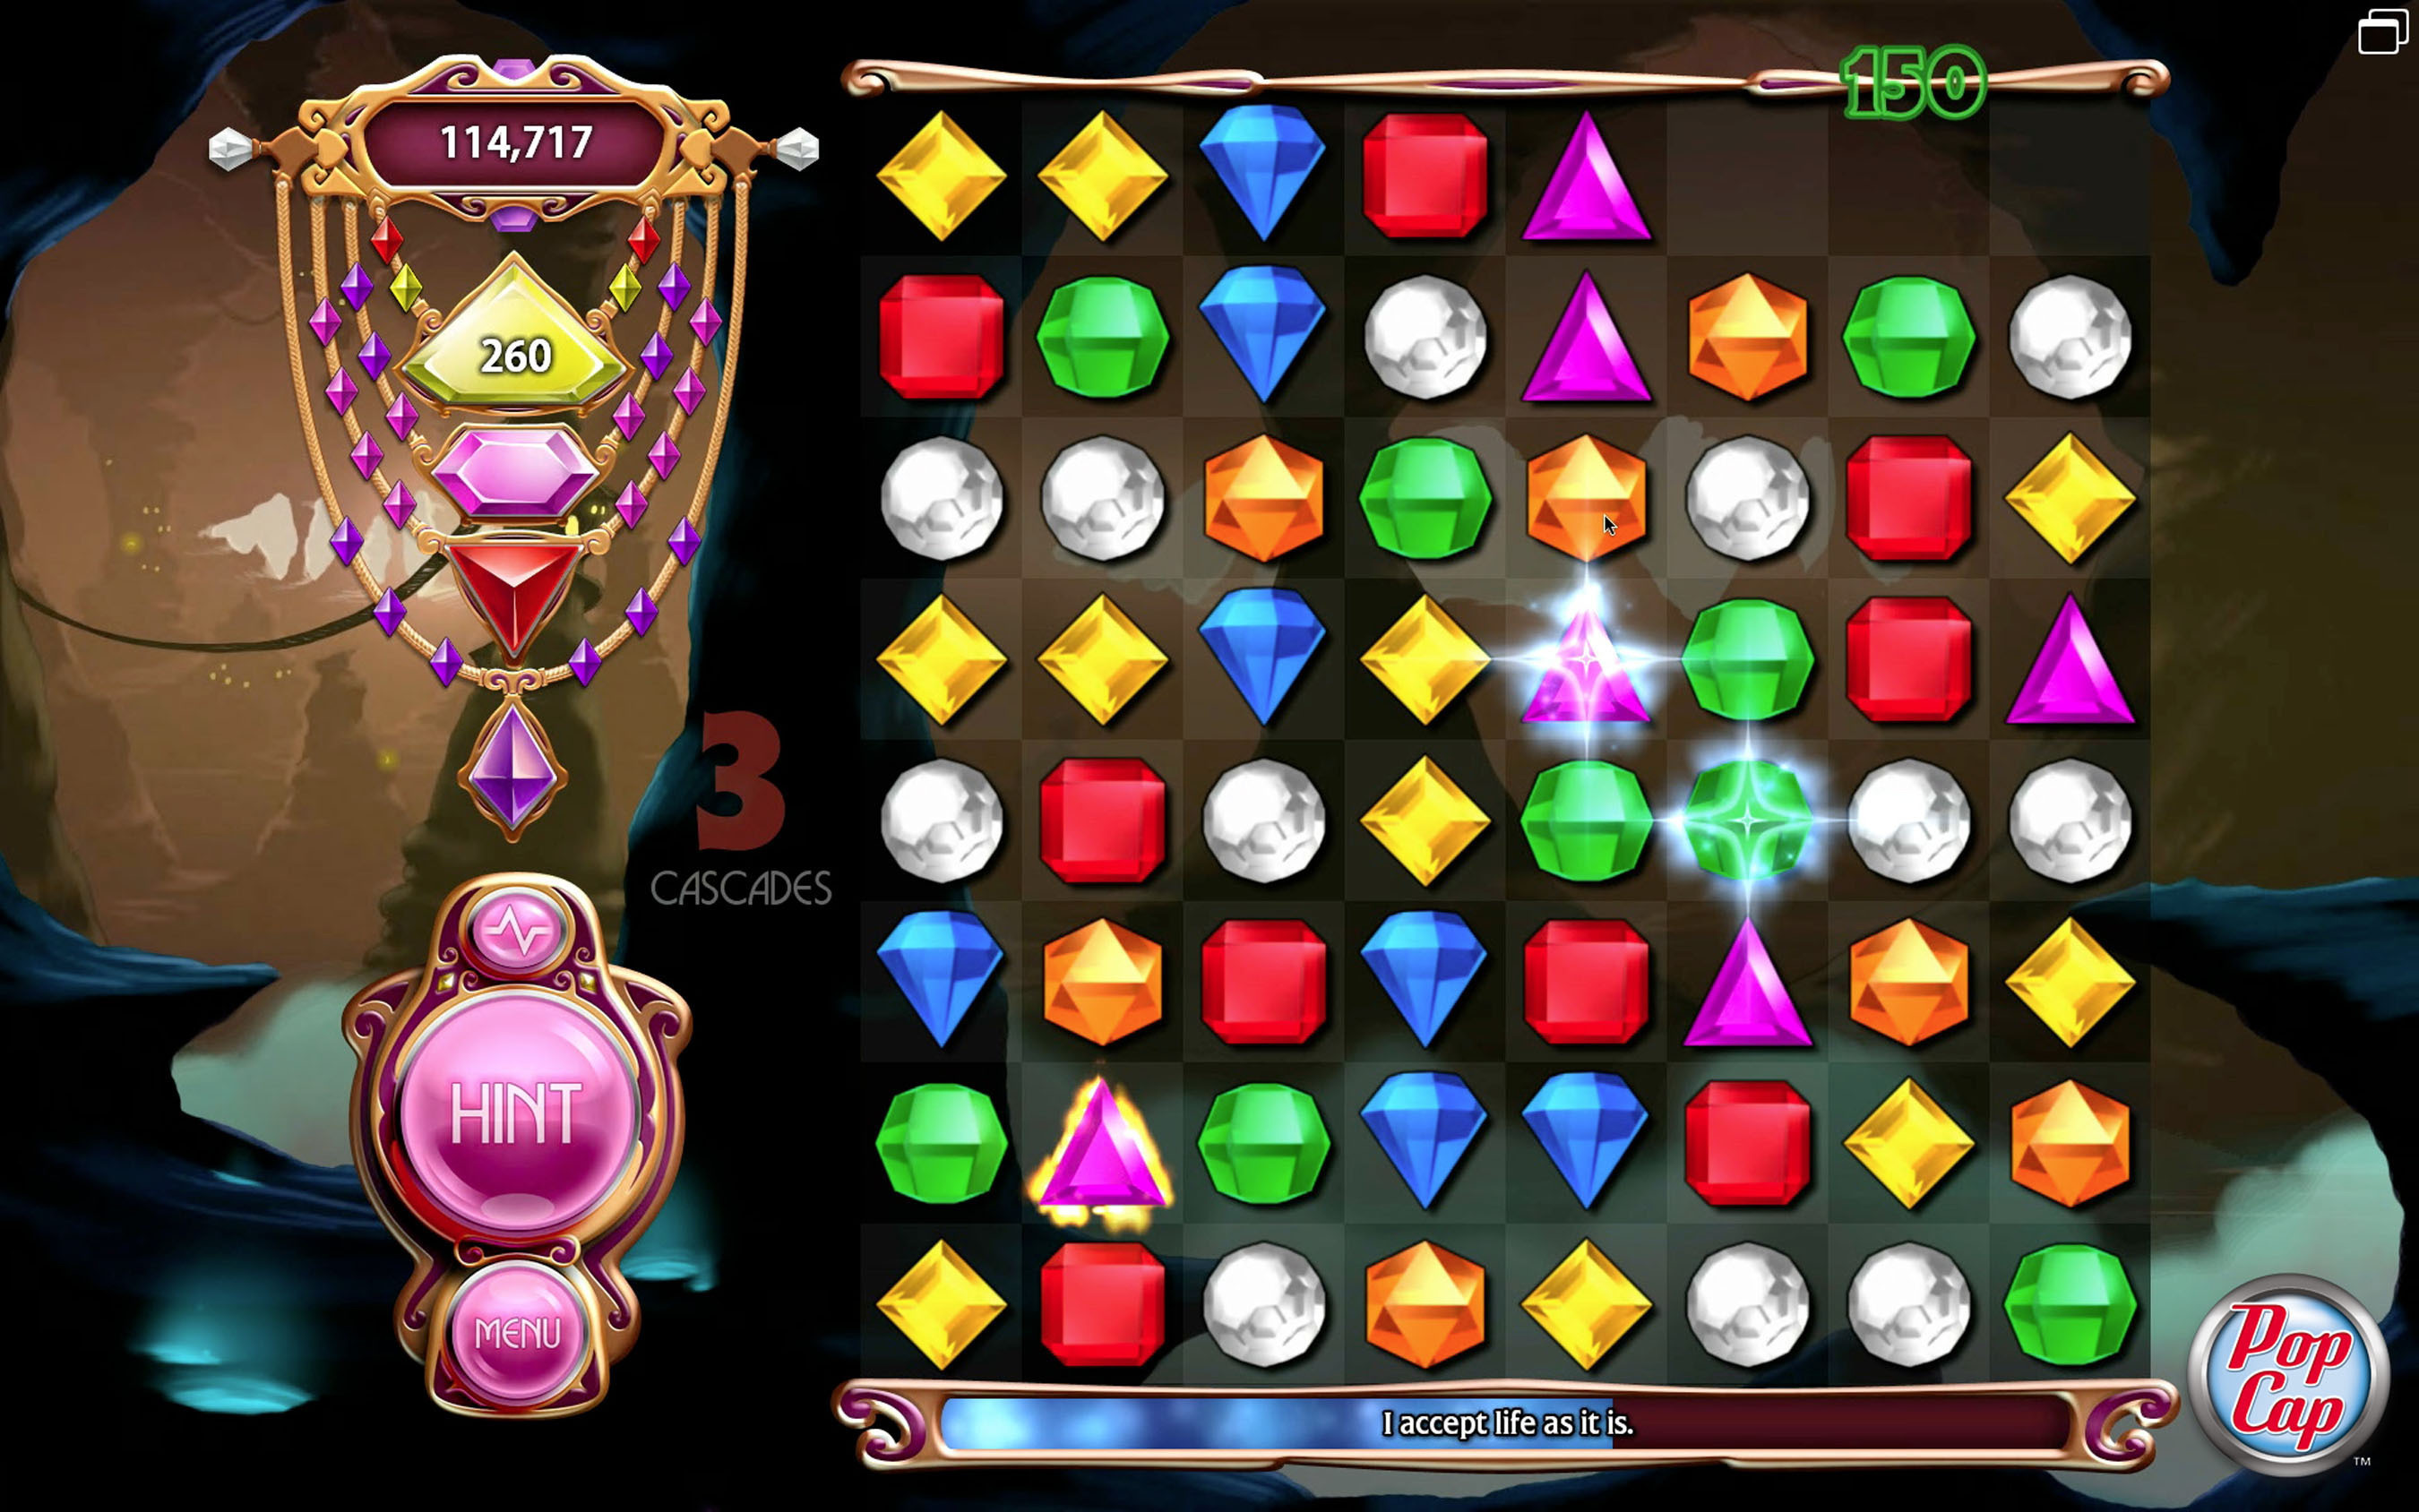 Bejeweled 2 - MSN Games Free Online Games 